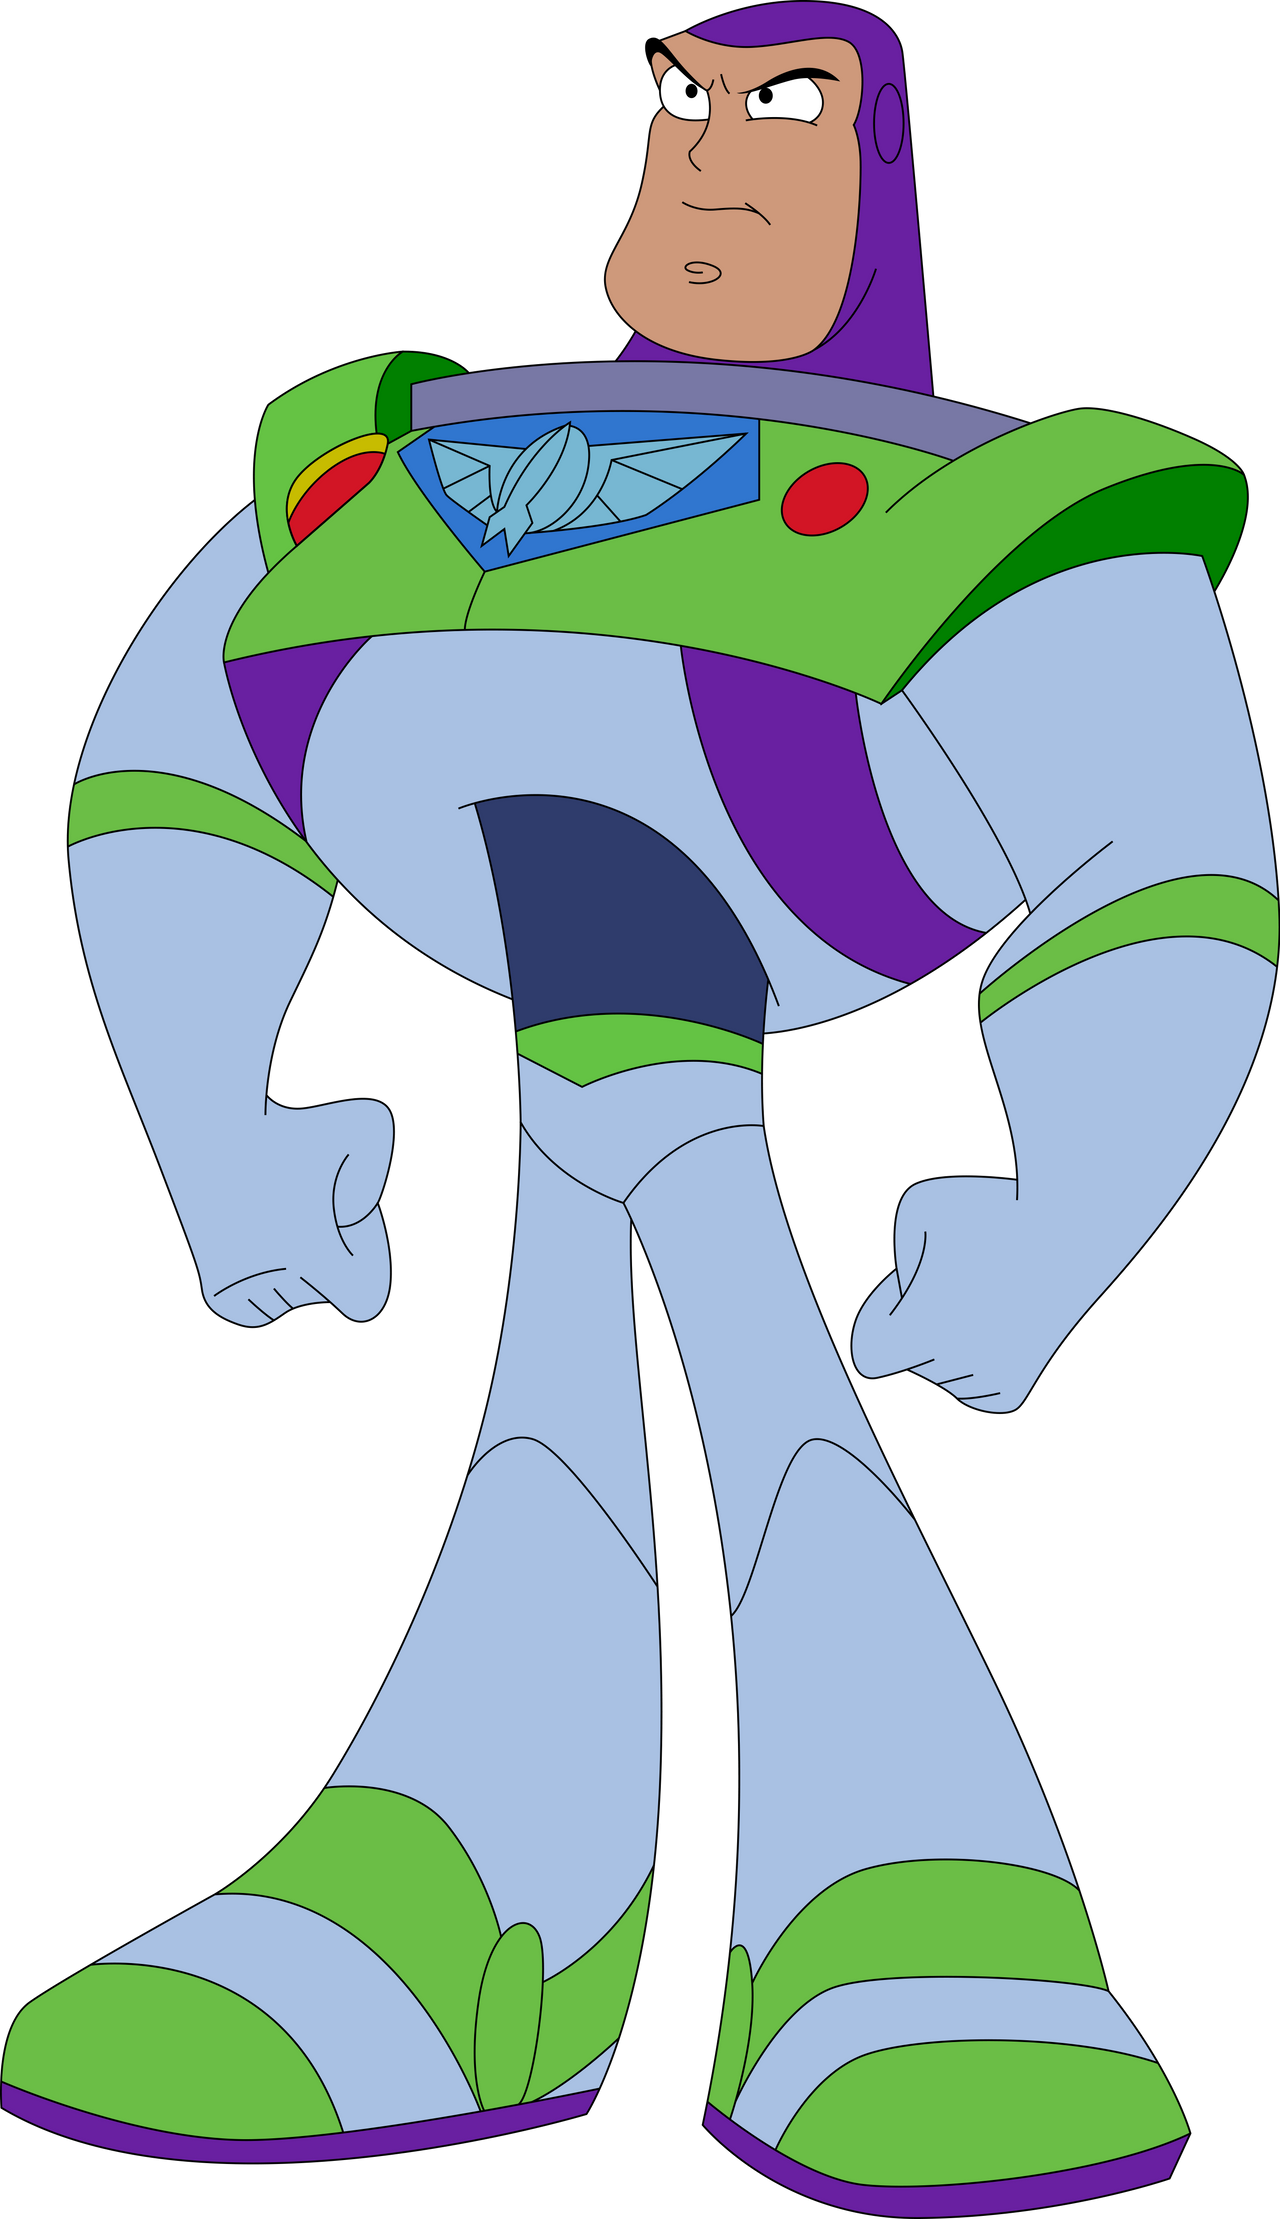 Buzz Lightyear (Buzz Lightyear of Star Command) | Heroes Wiki | Fandom